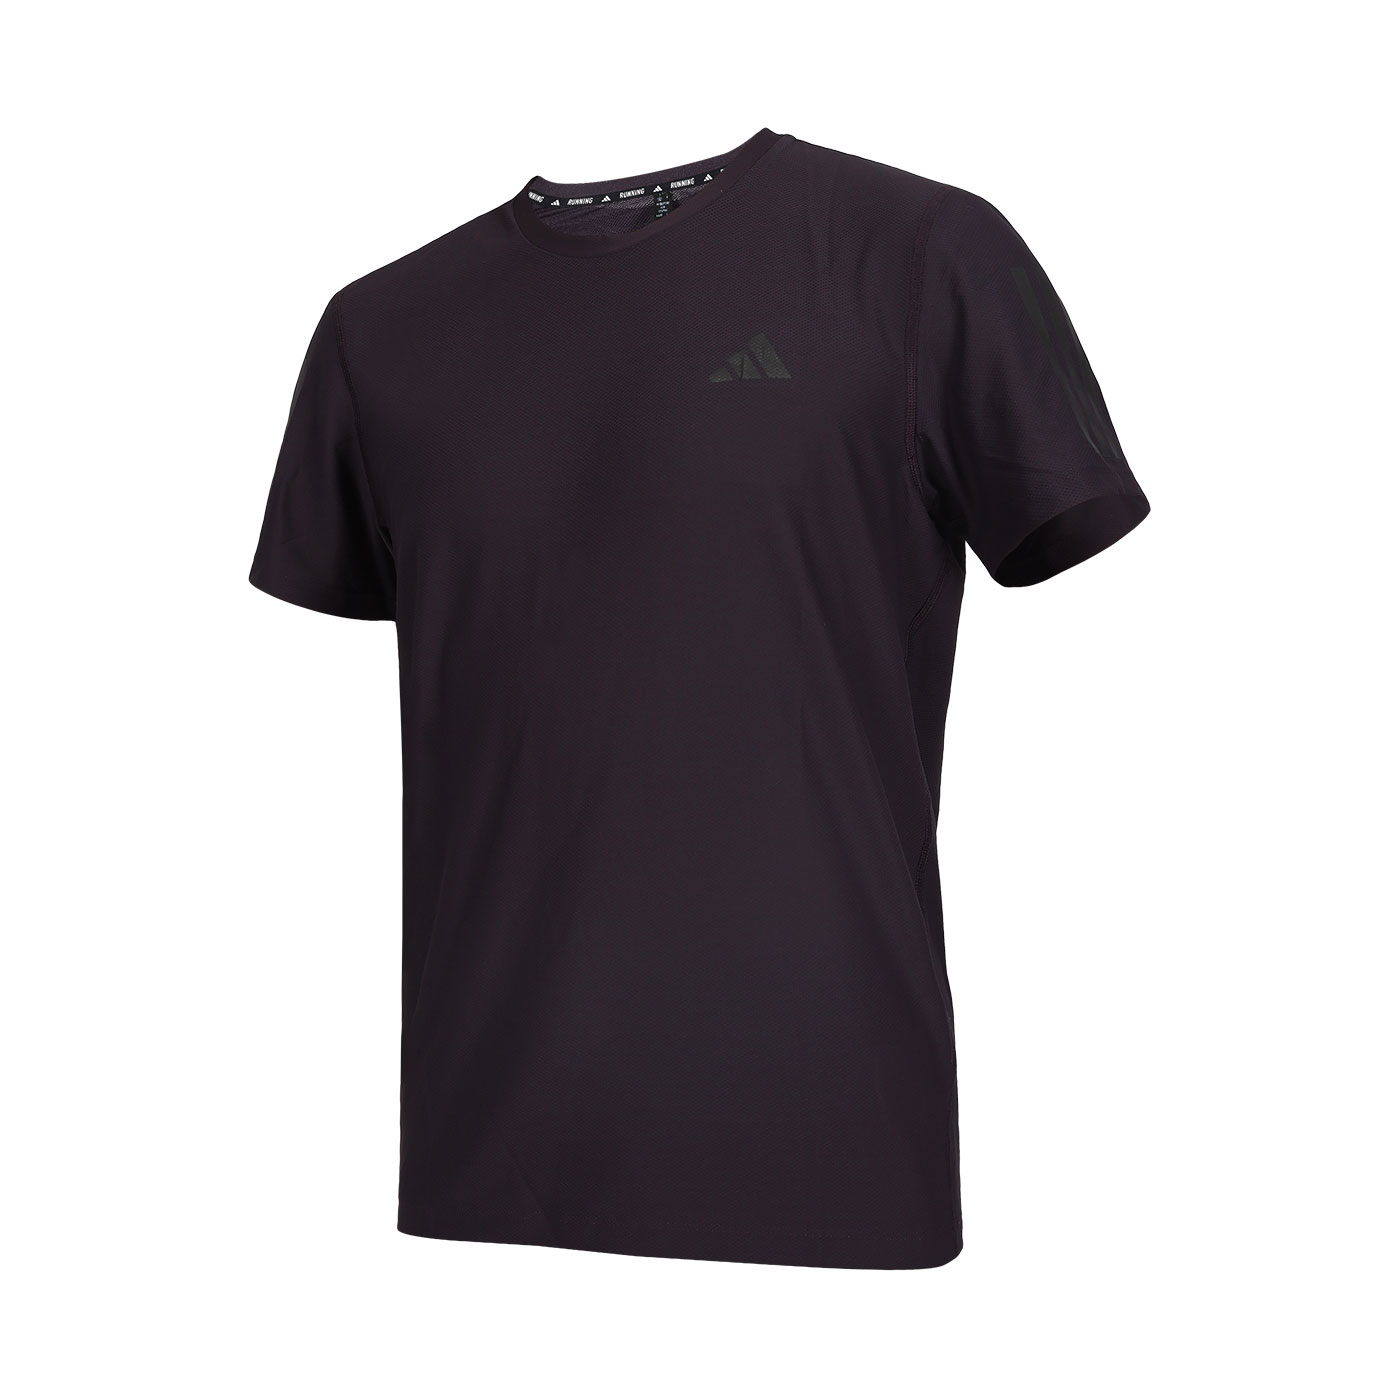 ADIDAS 男款短袖T恤  IN1506 - 深葡萄紫黑